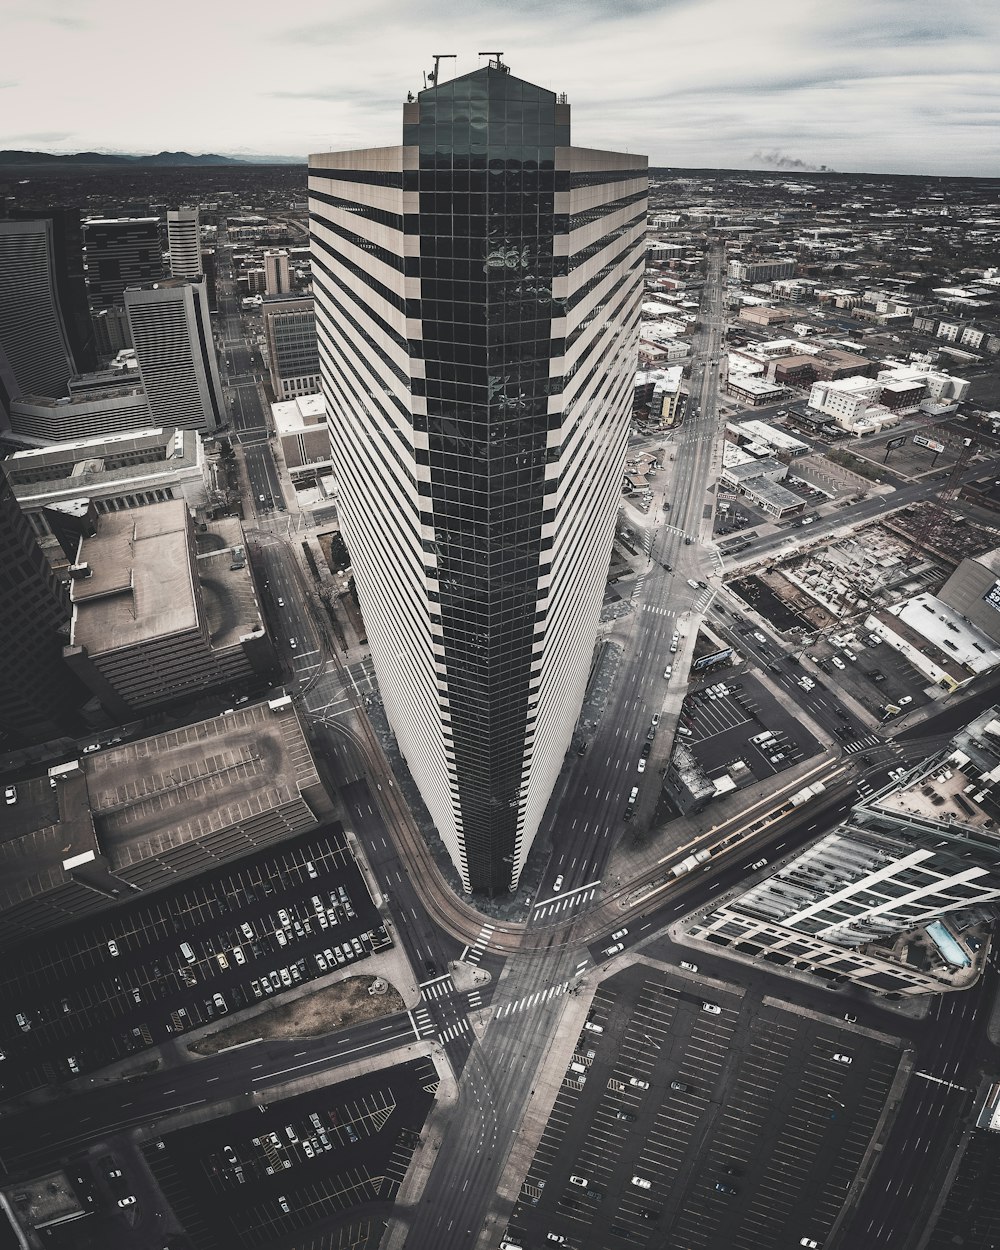 Fotografia panorâmica de arranha-céus de concreto